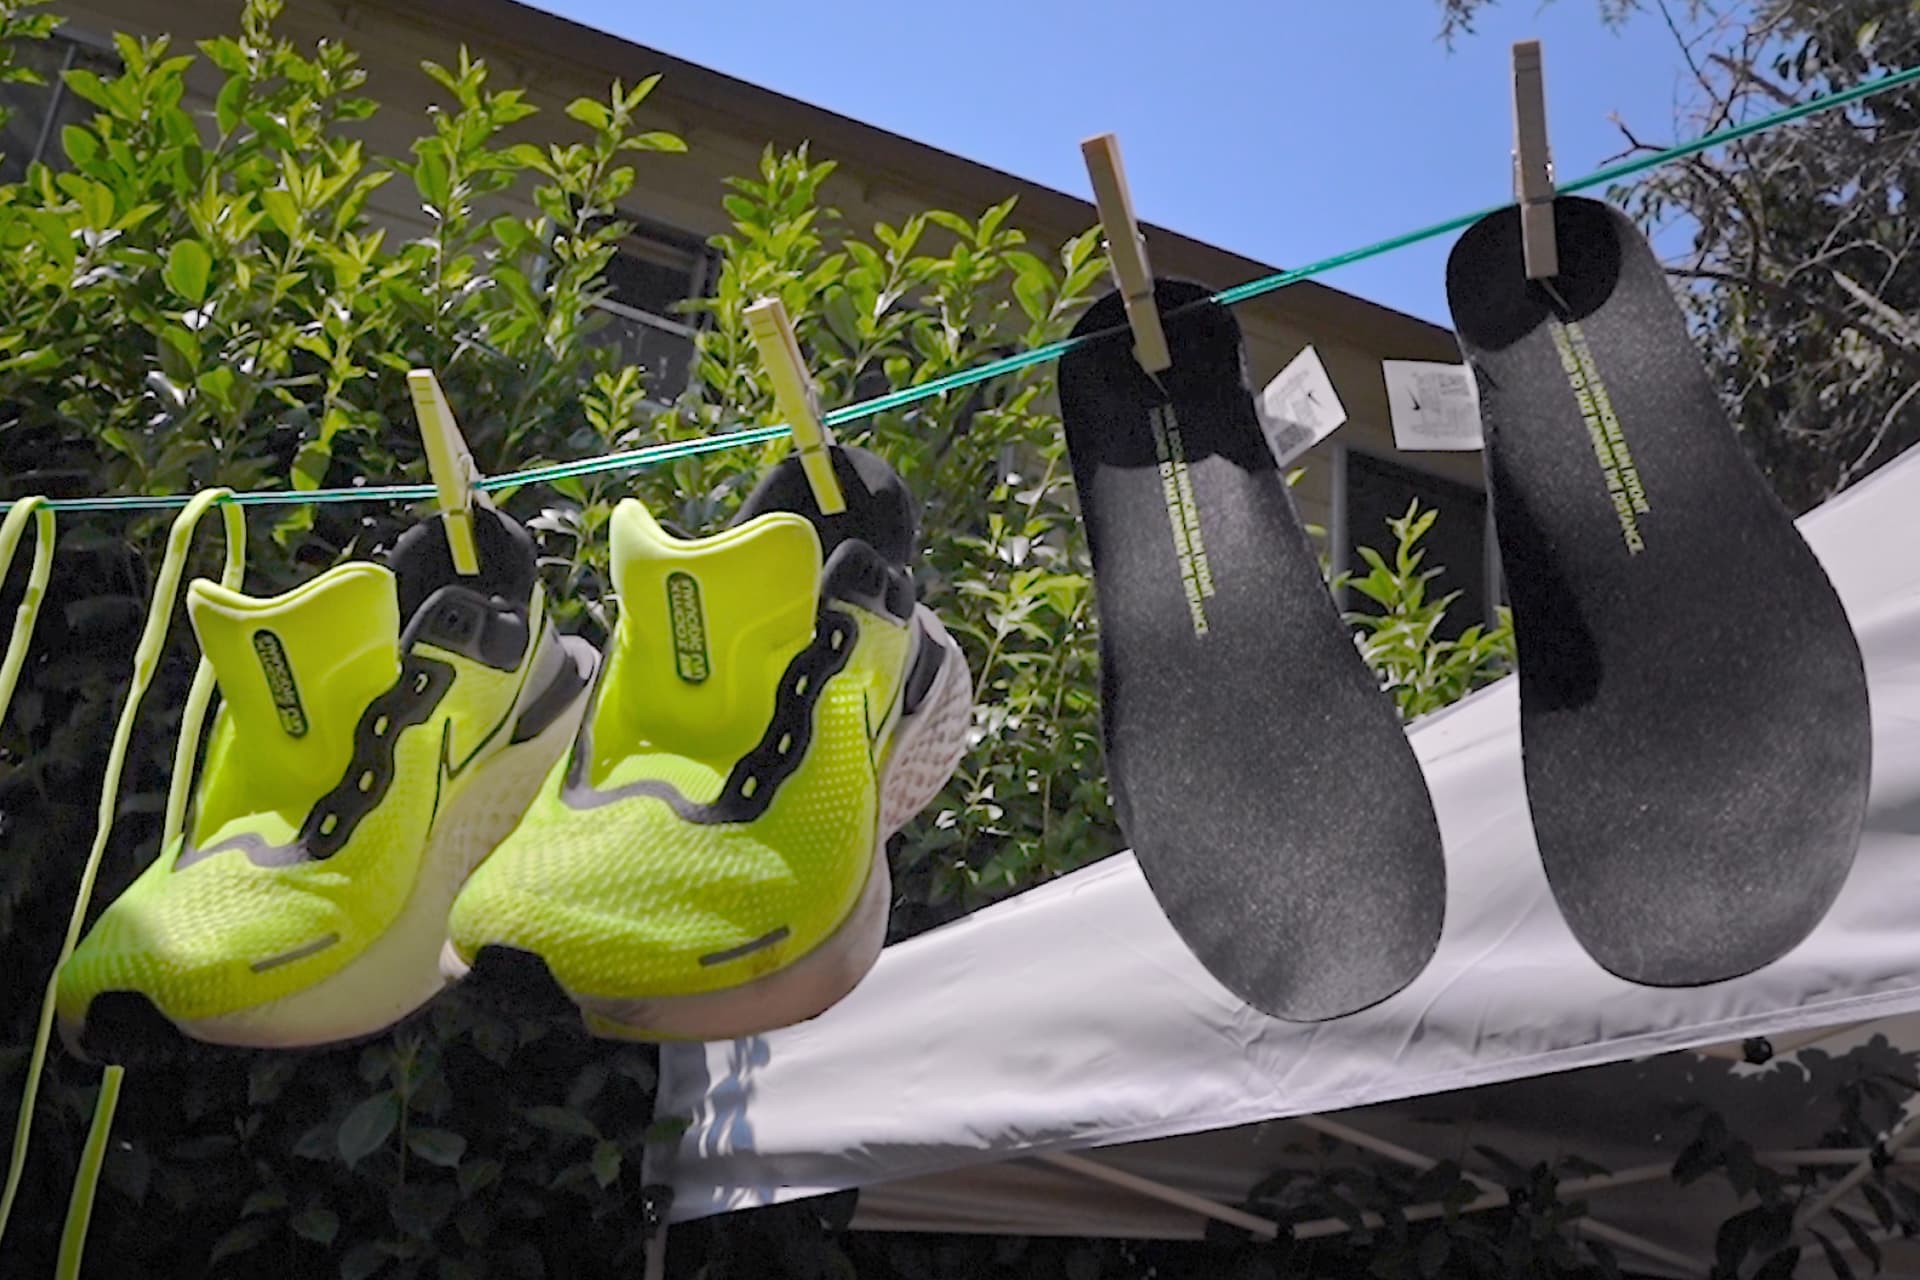 If you don't like Colin Kaepernick – donate your Nike shoes to Samaritan's  Feet | KentSterling.com